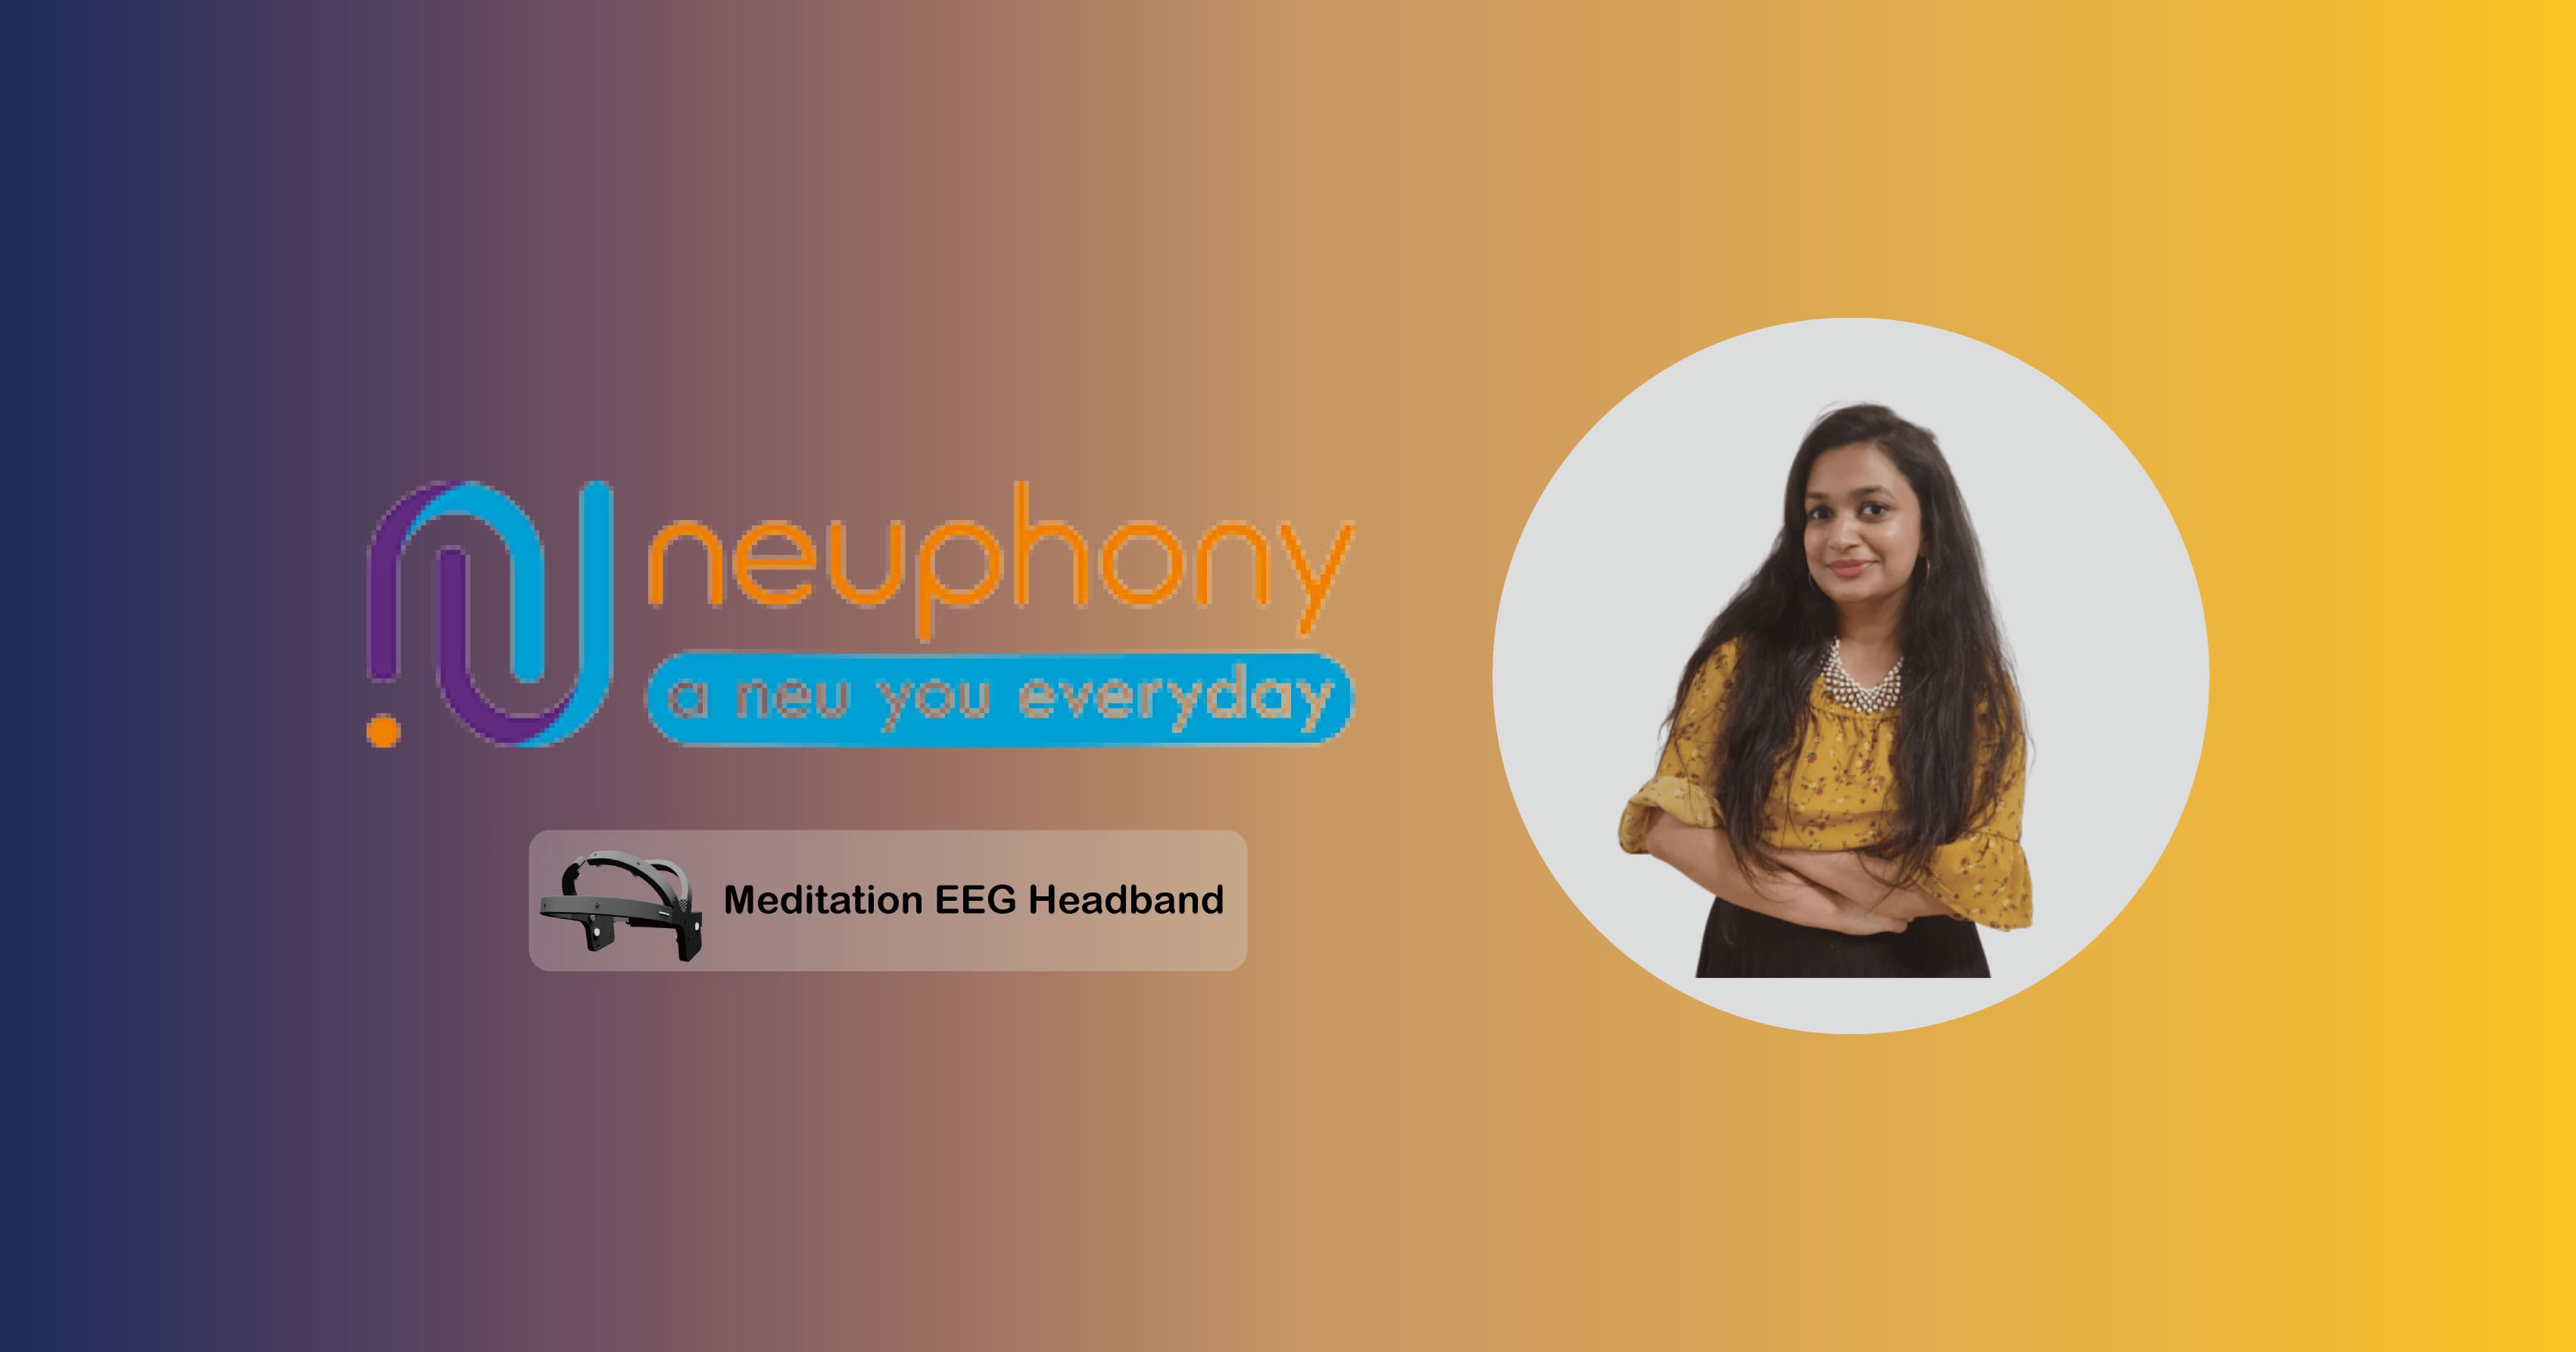 NeurotechJP bannar High accurate and versatile. Meditation headband "Neuphony" | Ria Rustagi